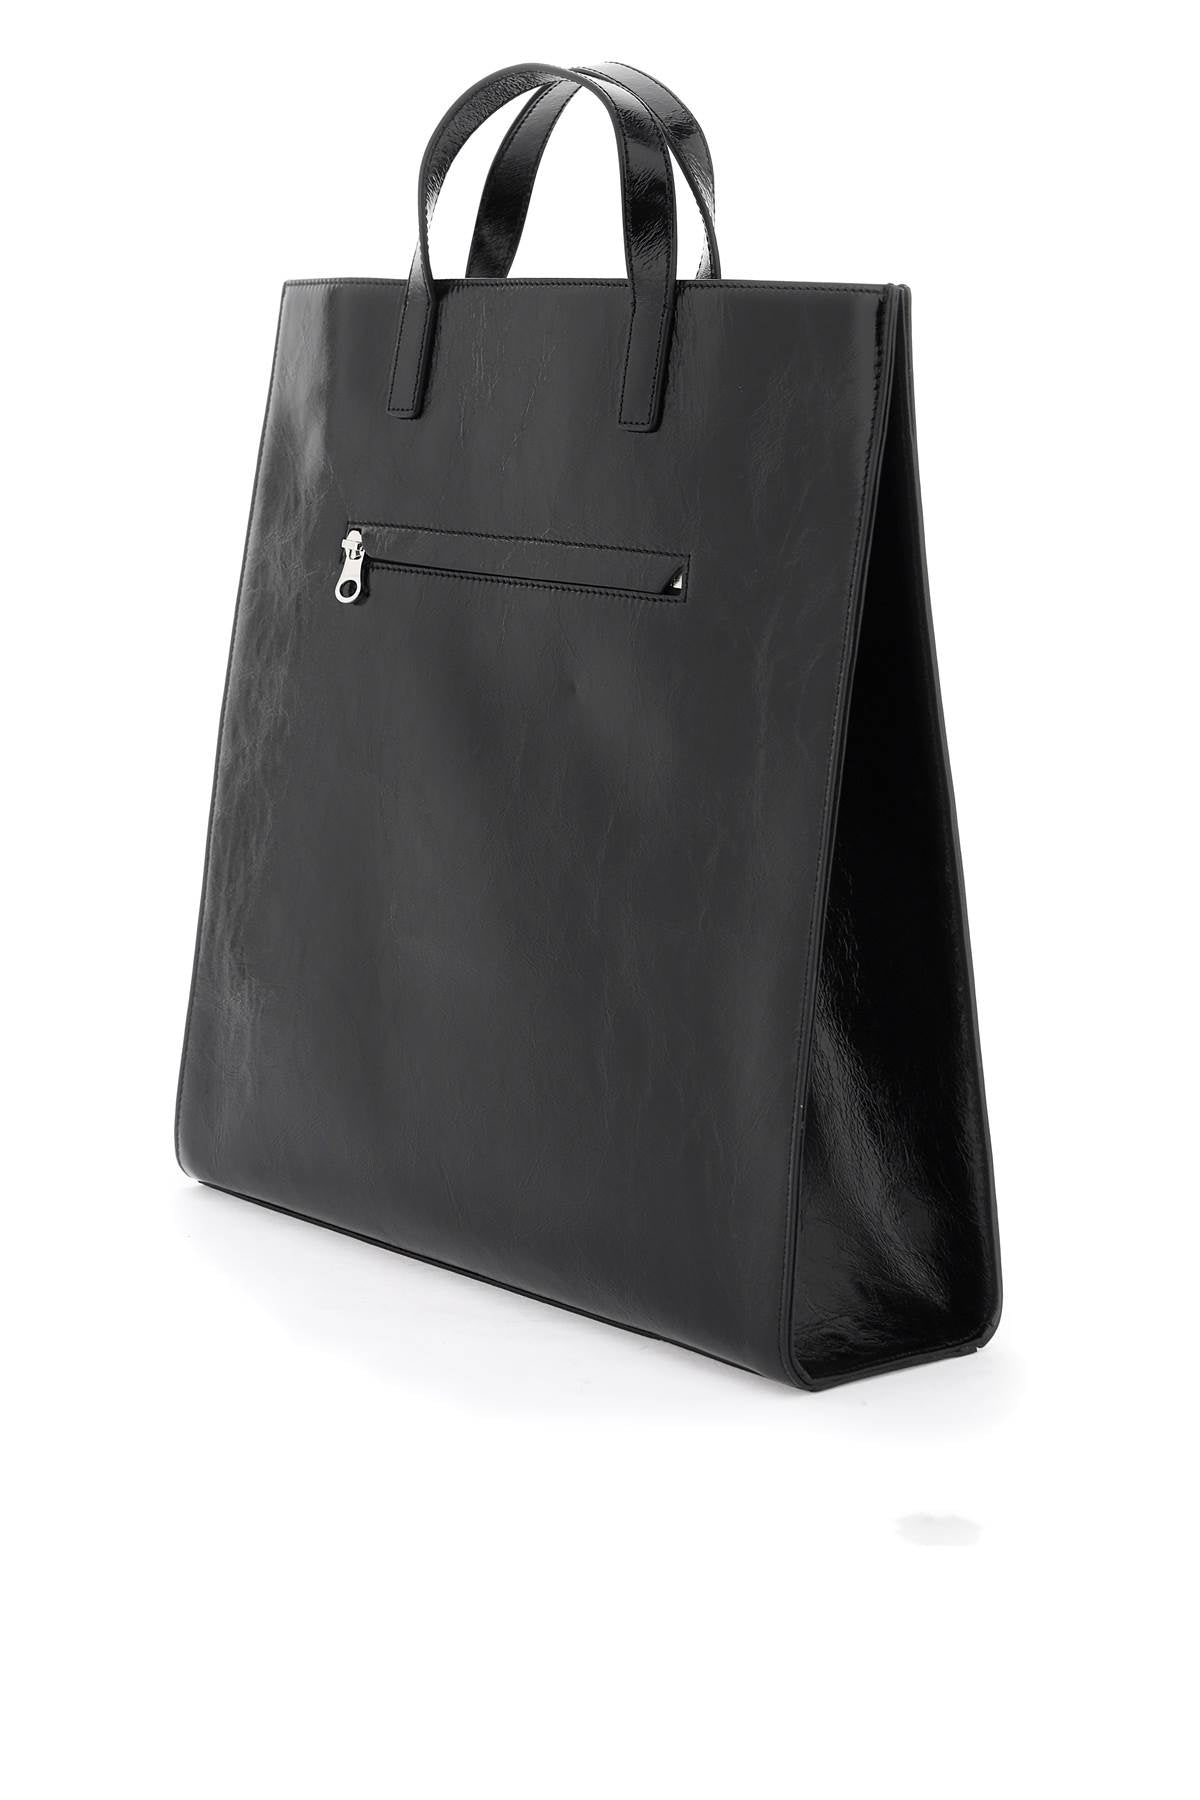 COURREGÈS Glossy Naplack Leather Tote Handbag for Women